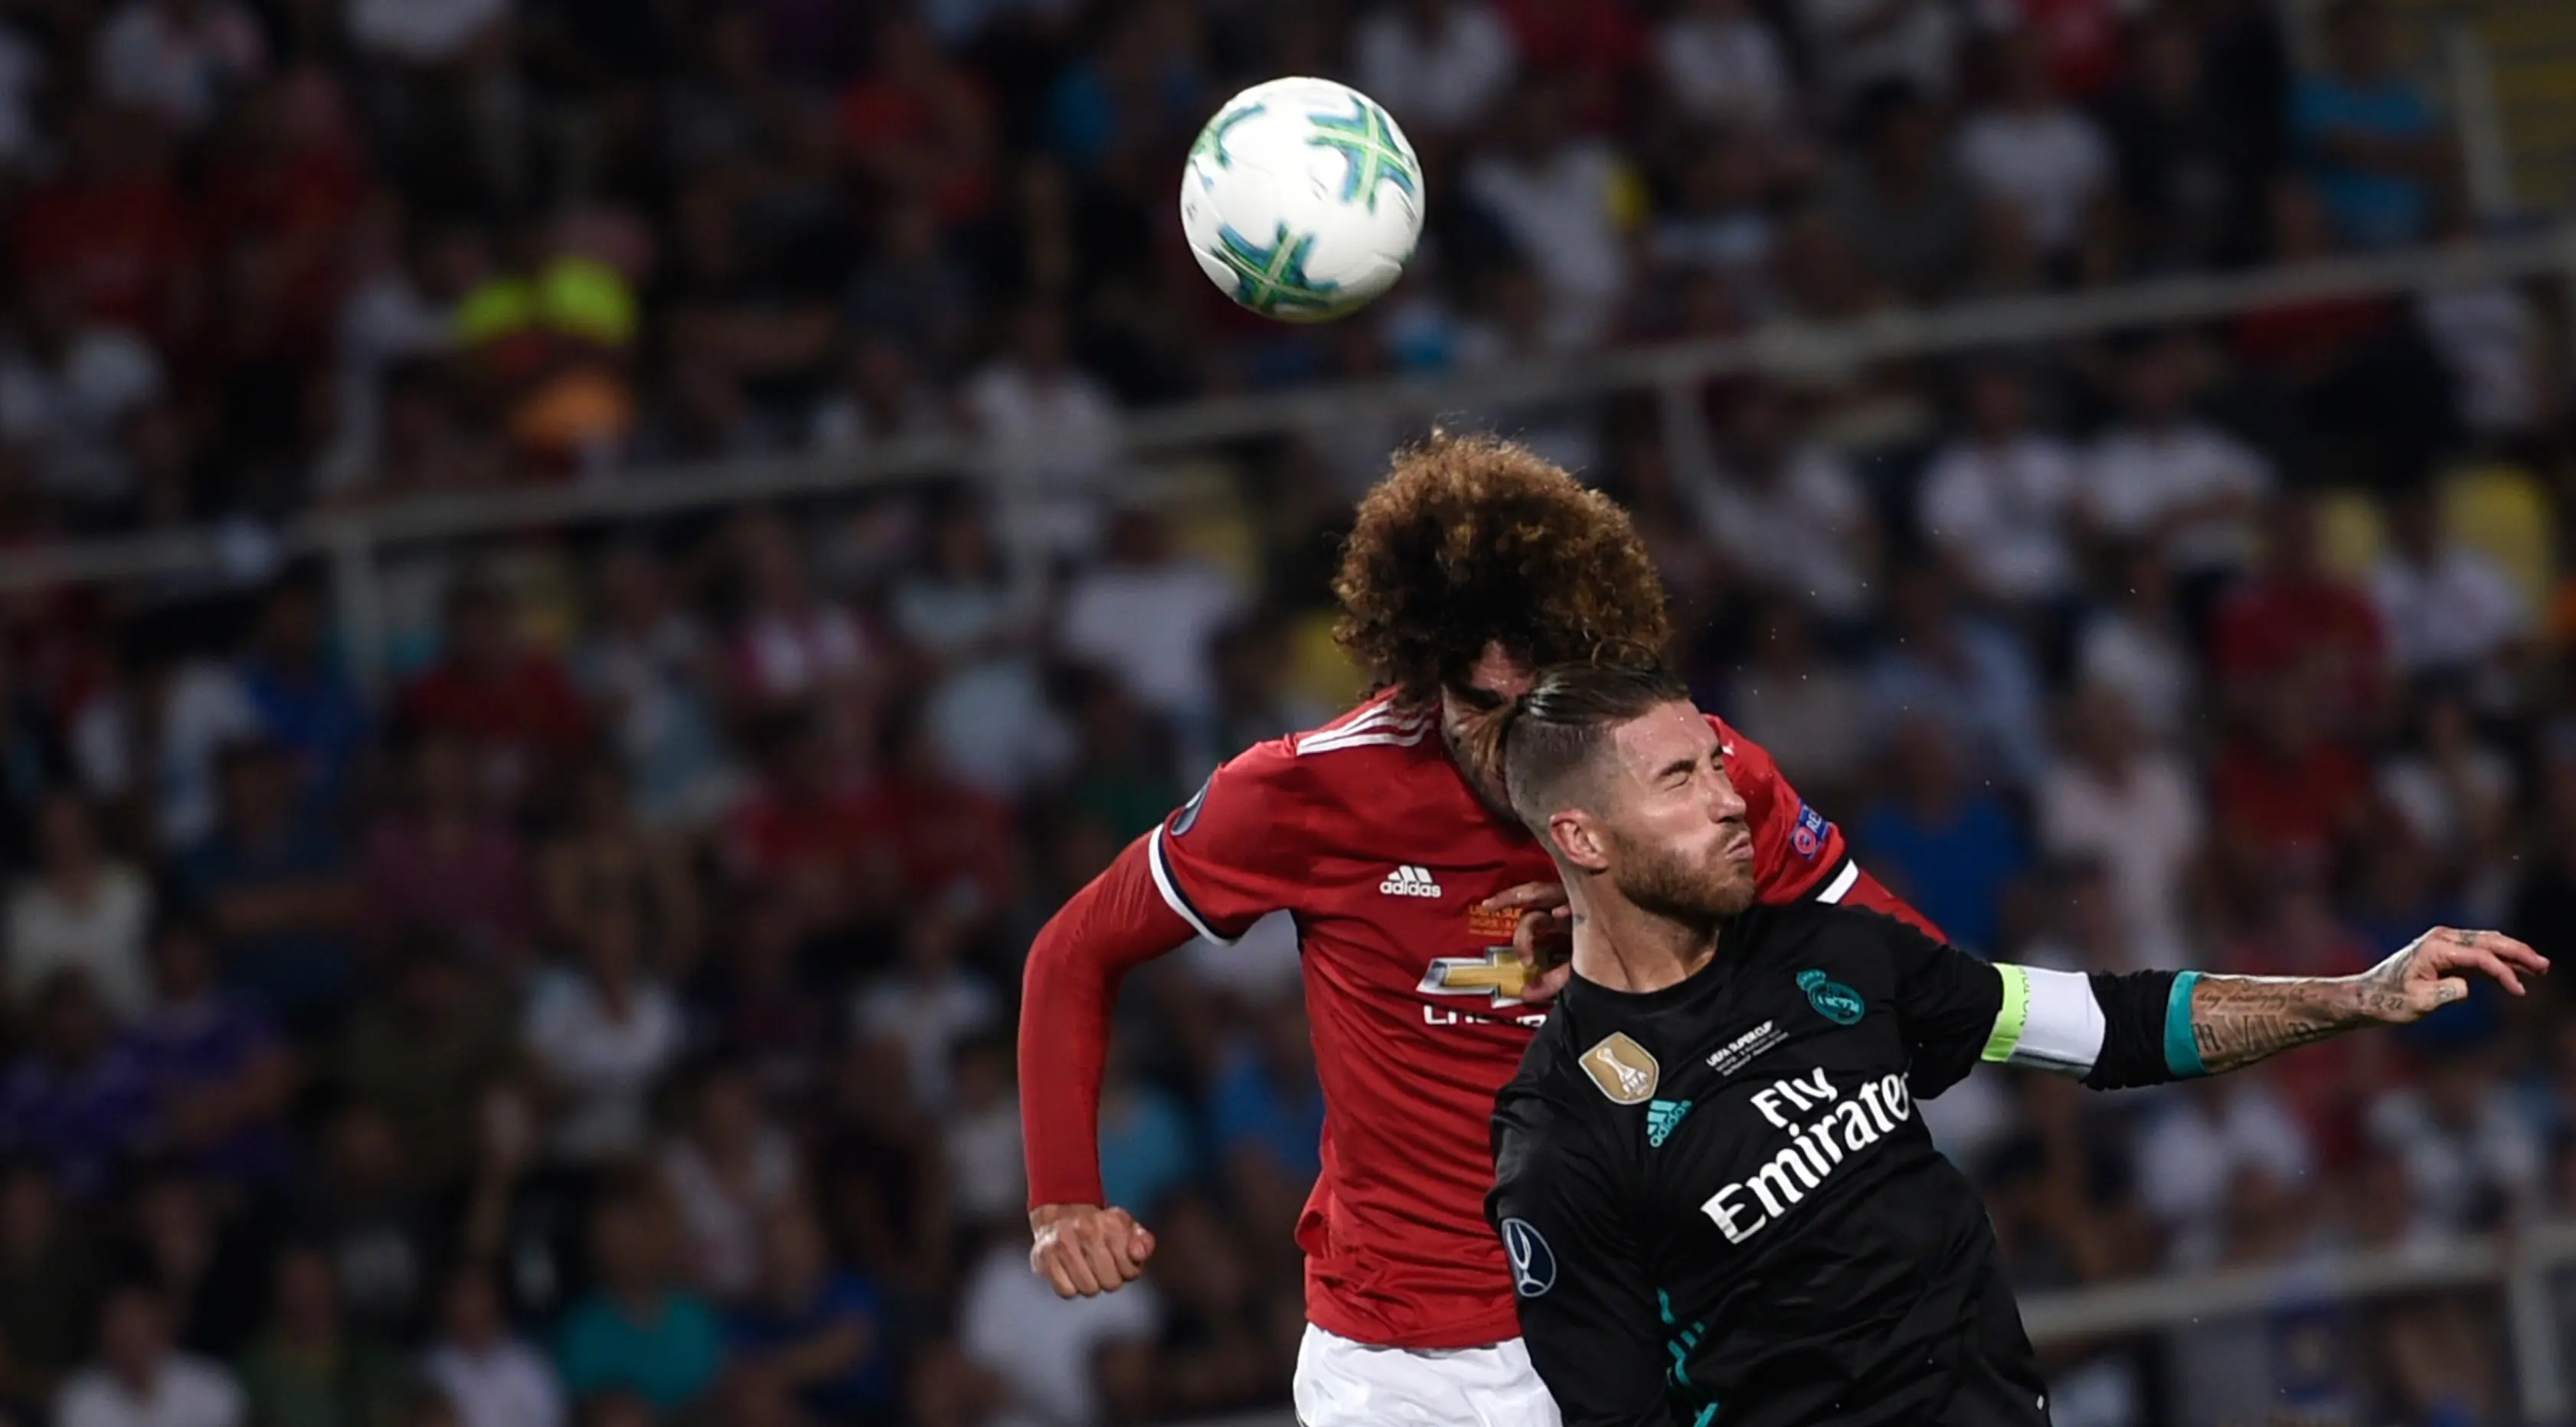 Gelandang Manchester United (MU), Marouane Fellaini berusaha menyundul bola dalam laga Piala Super Eropa melawan Real Madrid di Macedonia, Selasa (8/8).  (Nikolay DOYCHINOV / AFP)